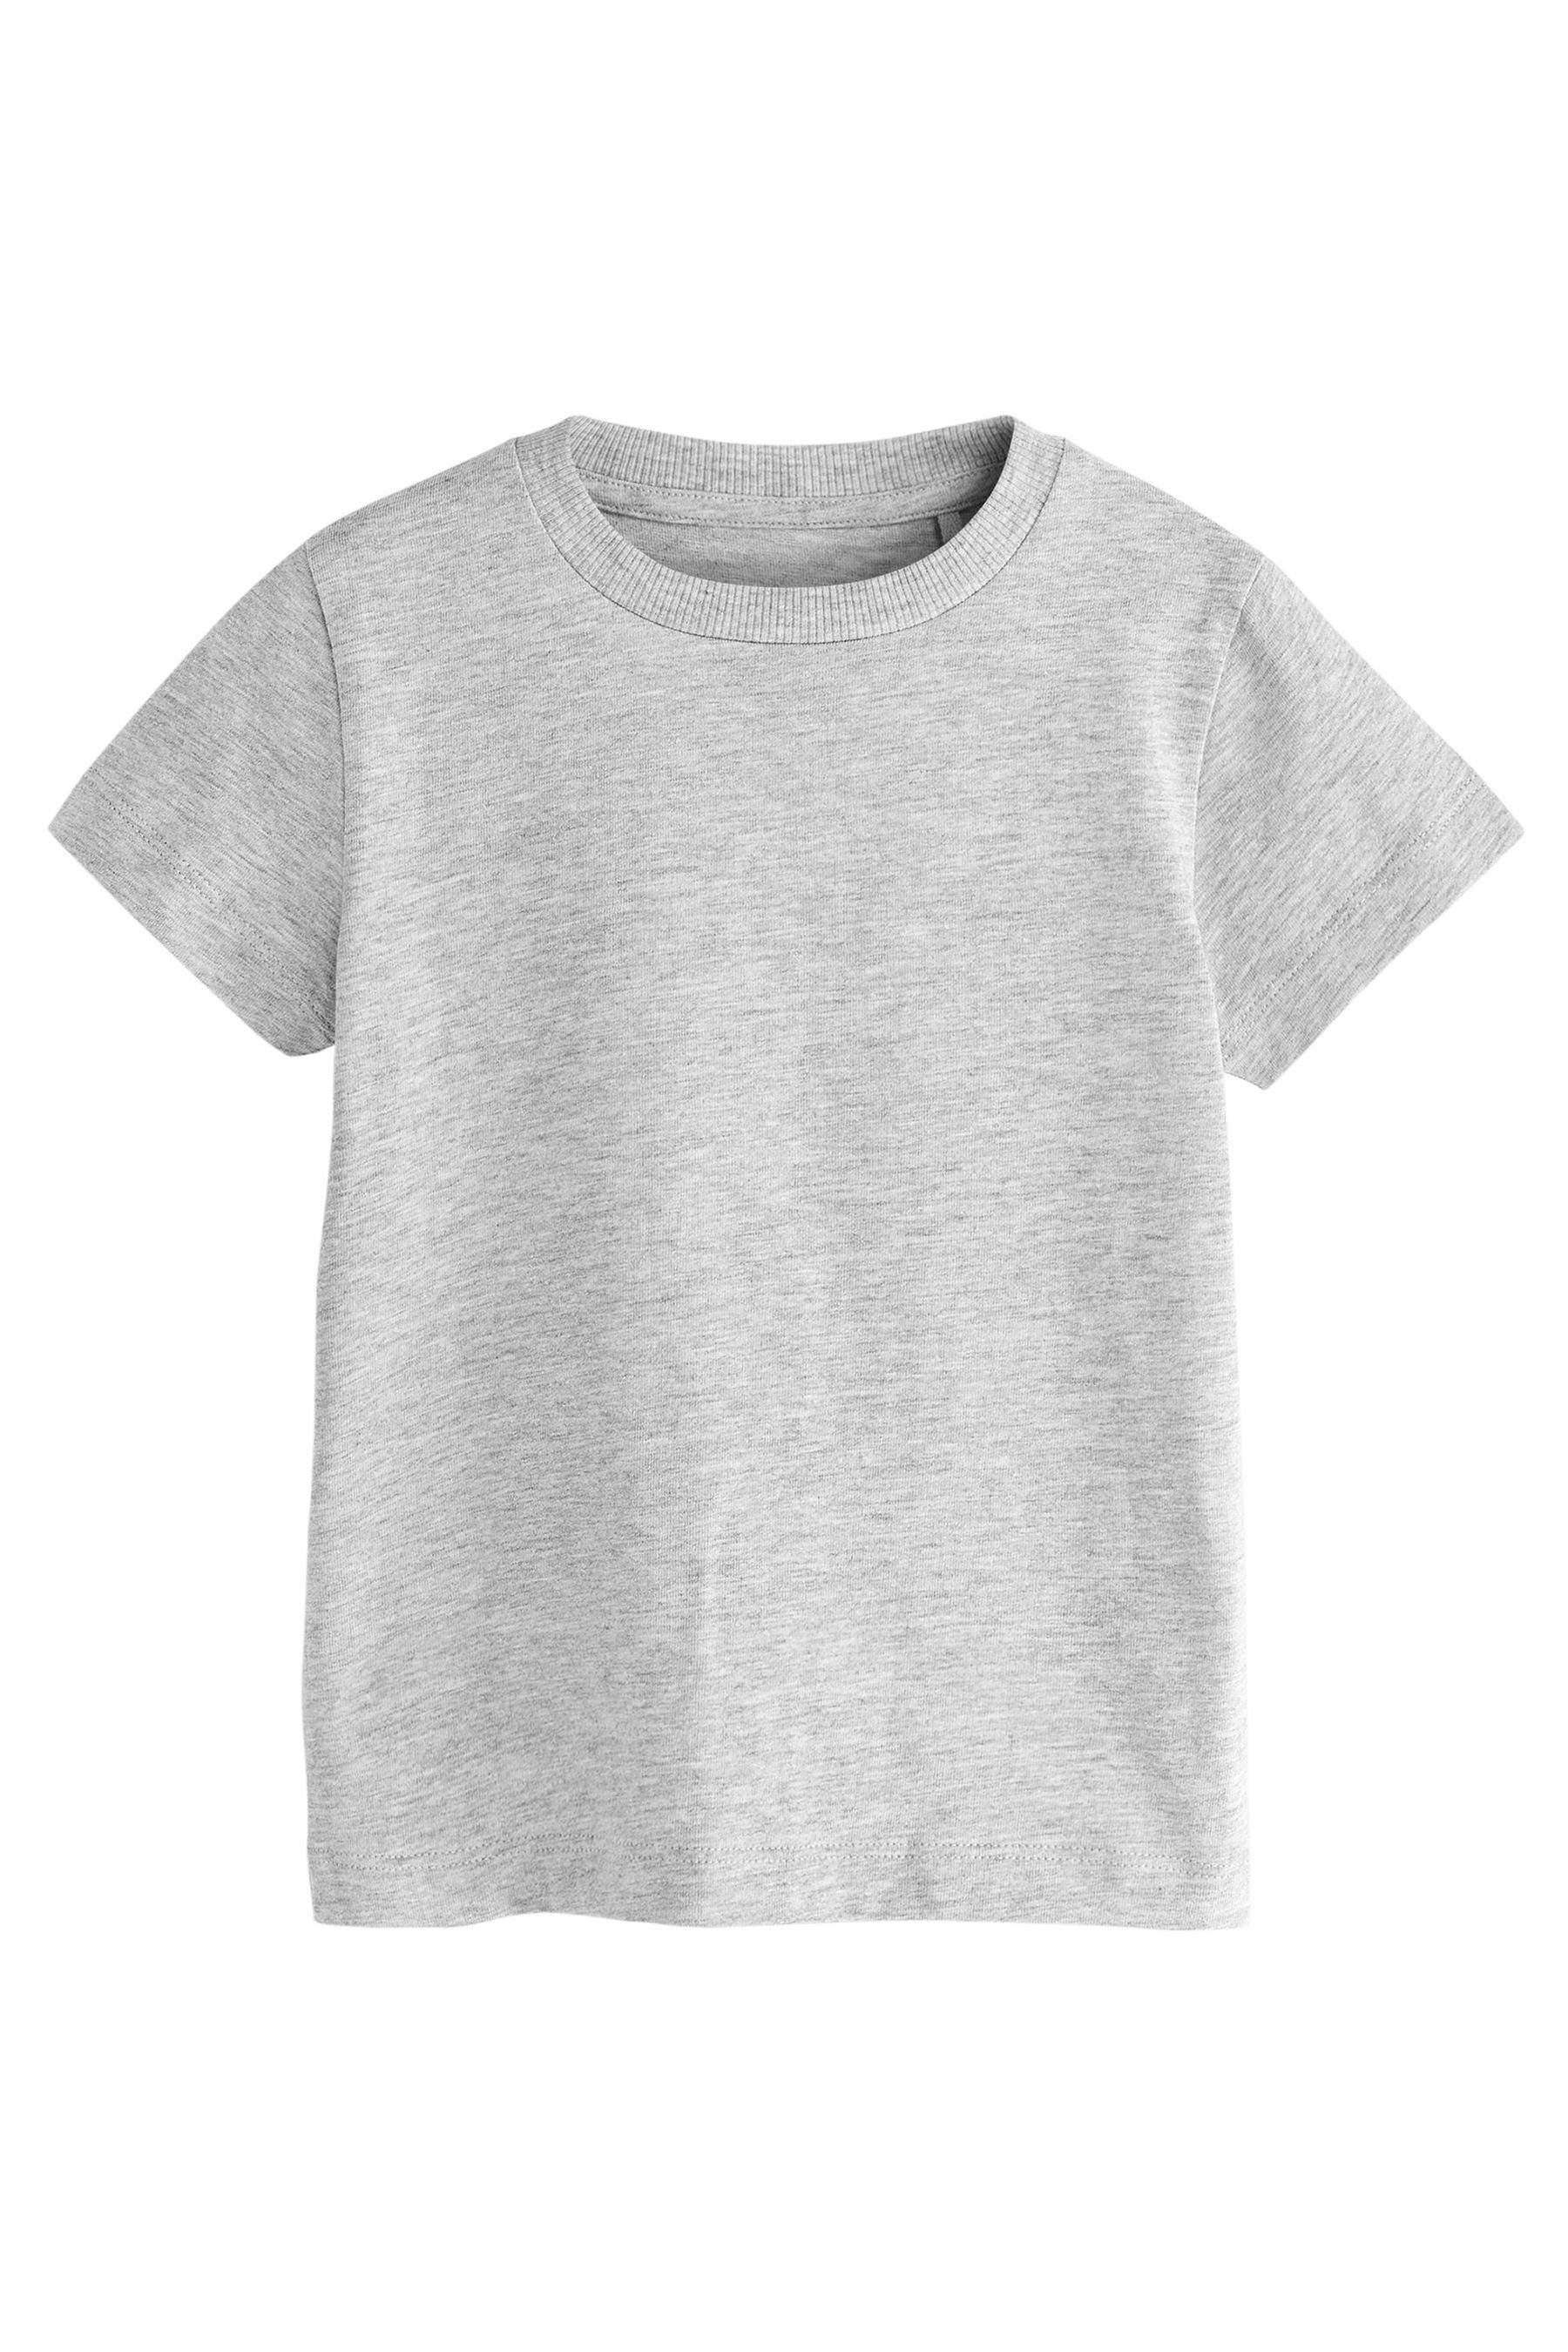 Next T-Shirt Kurzärmelige Figurenmotiv, T-Shirts Slogan Black/White mit (3-tlg) 3er-Pack